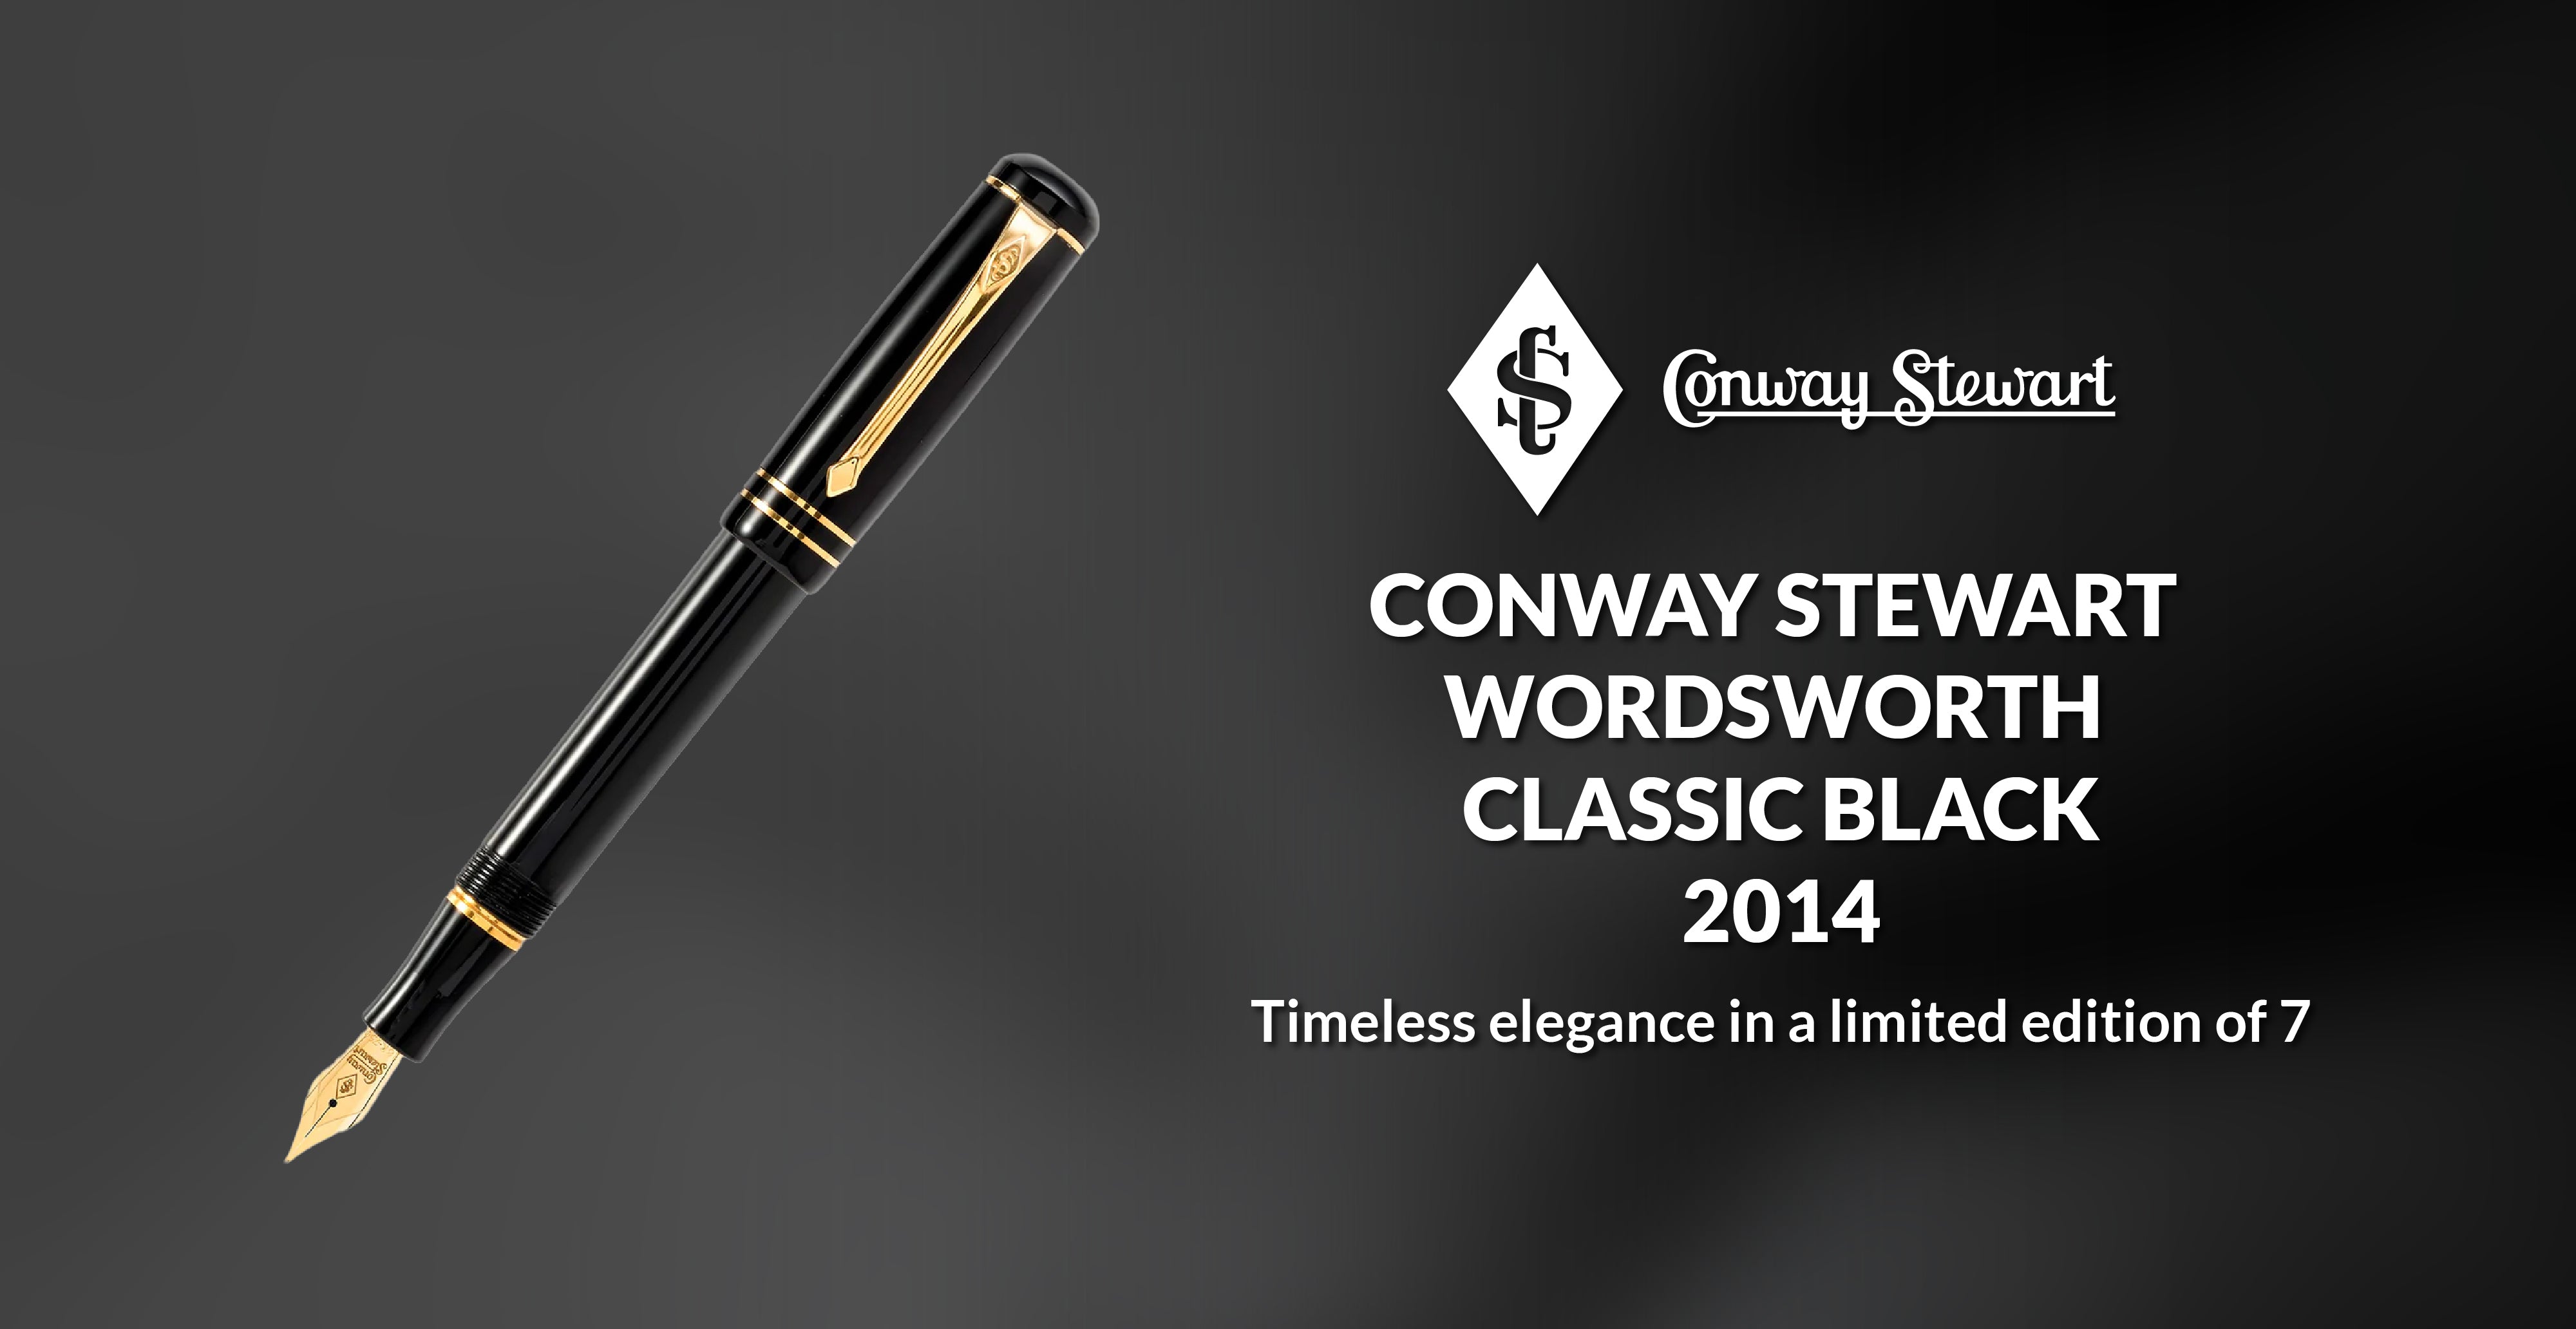 Conway Stewart Wordsworth Classic Black, 2014 - Conway Stewart